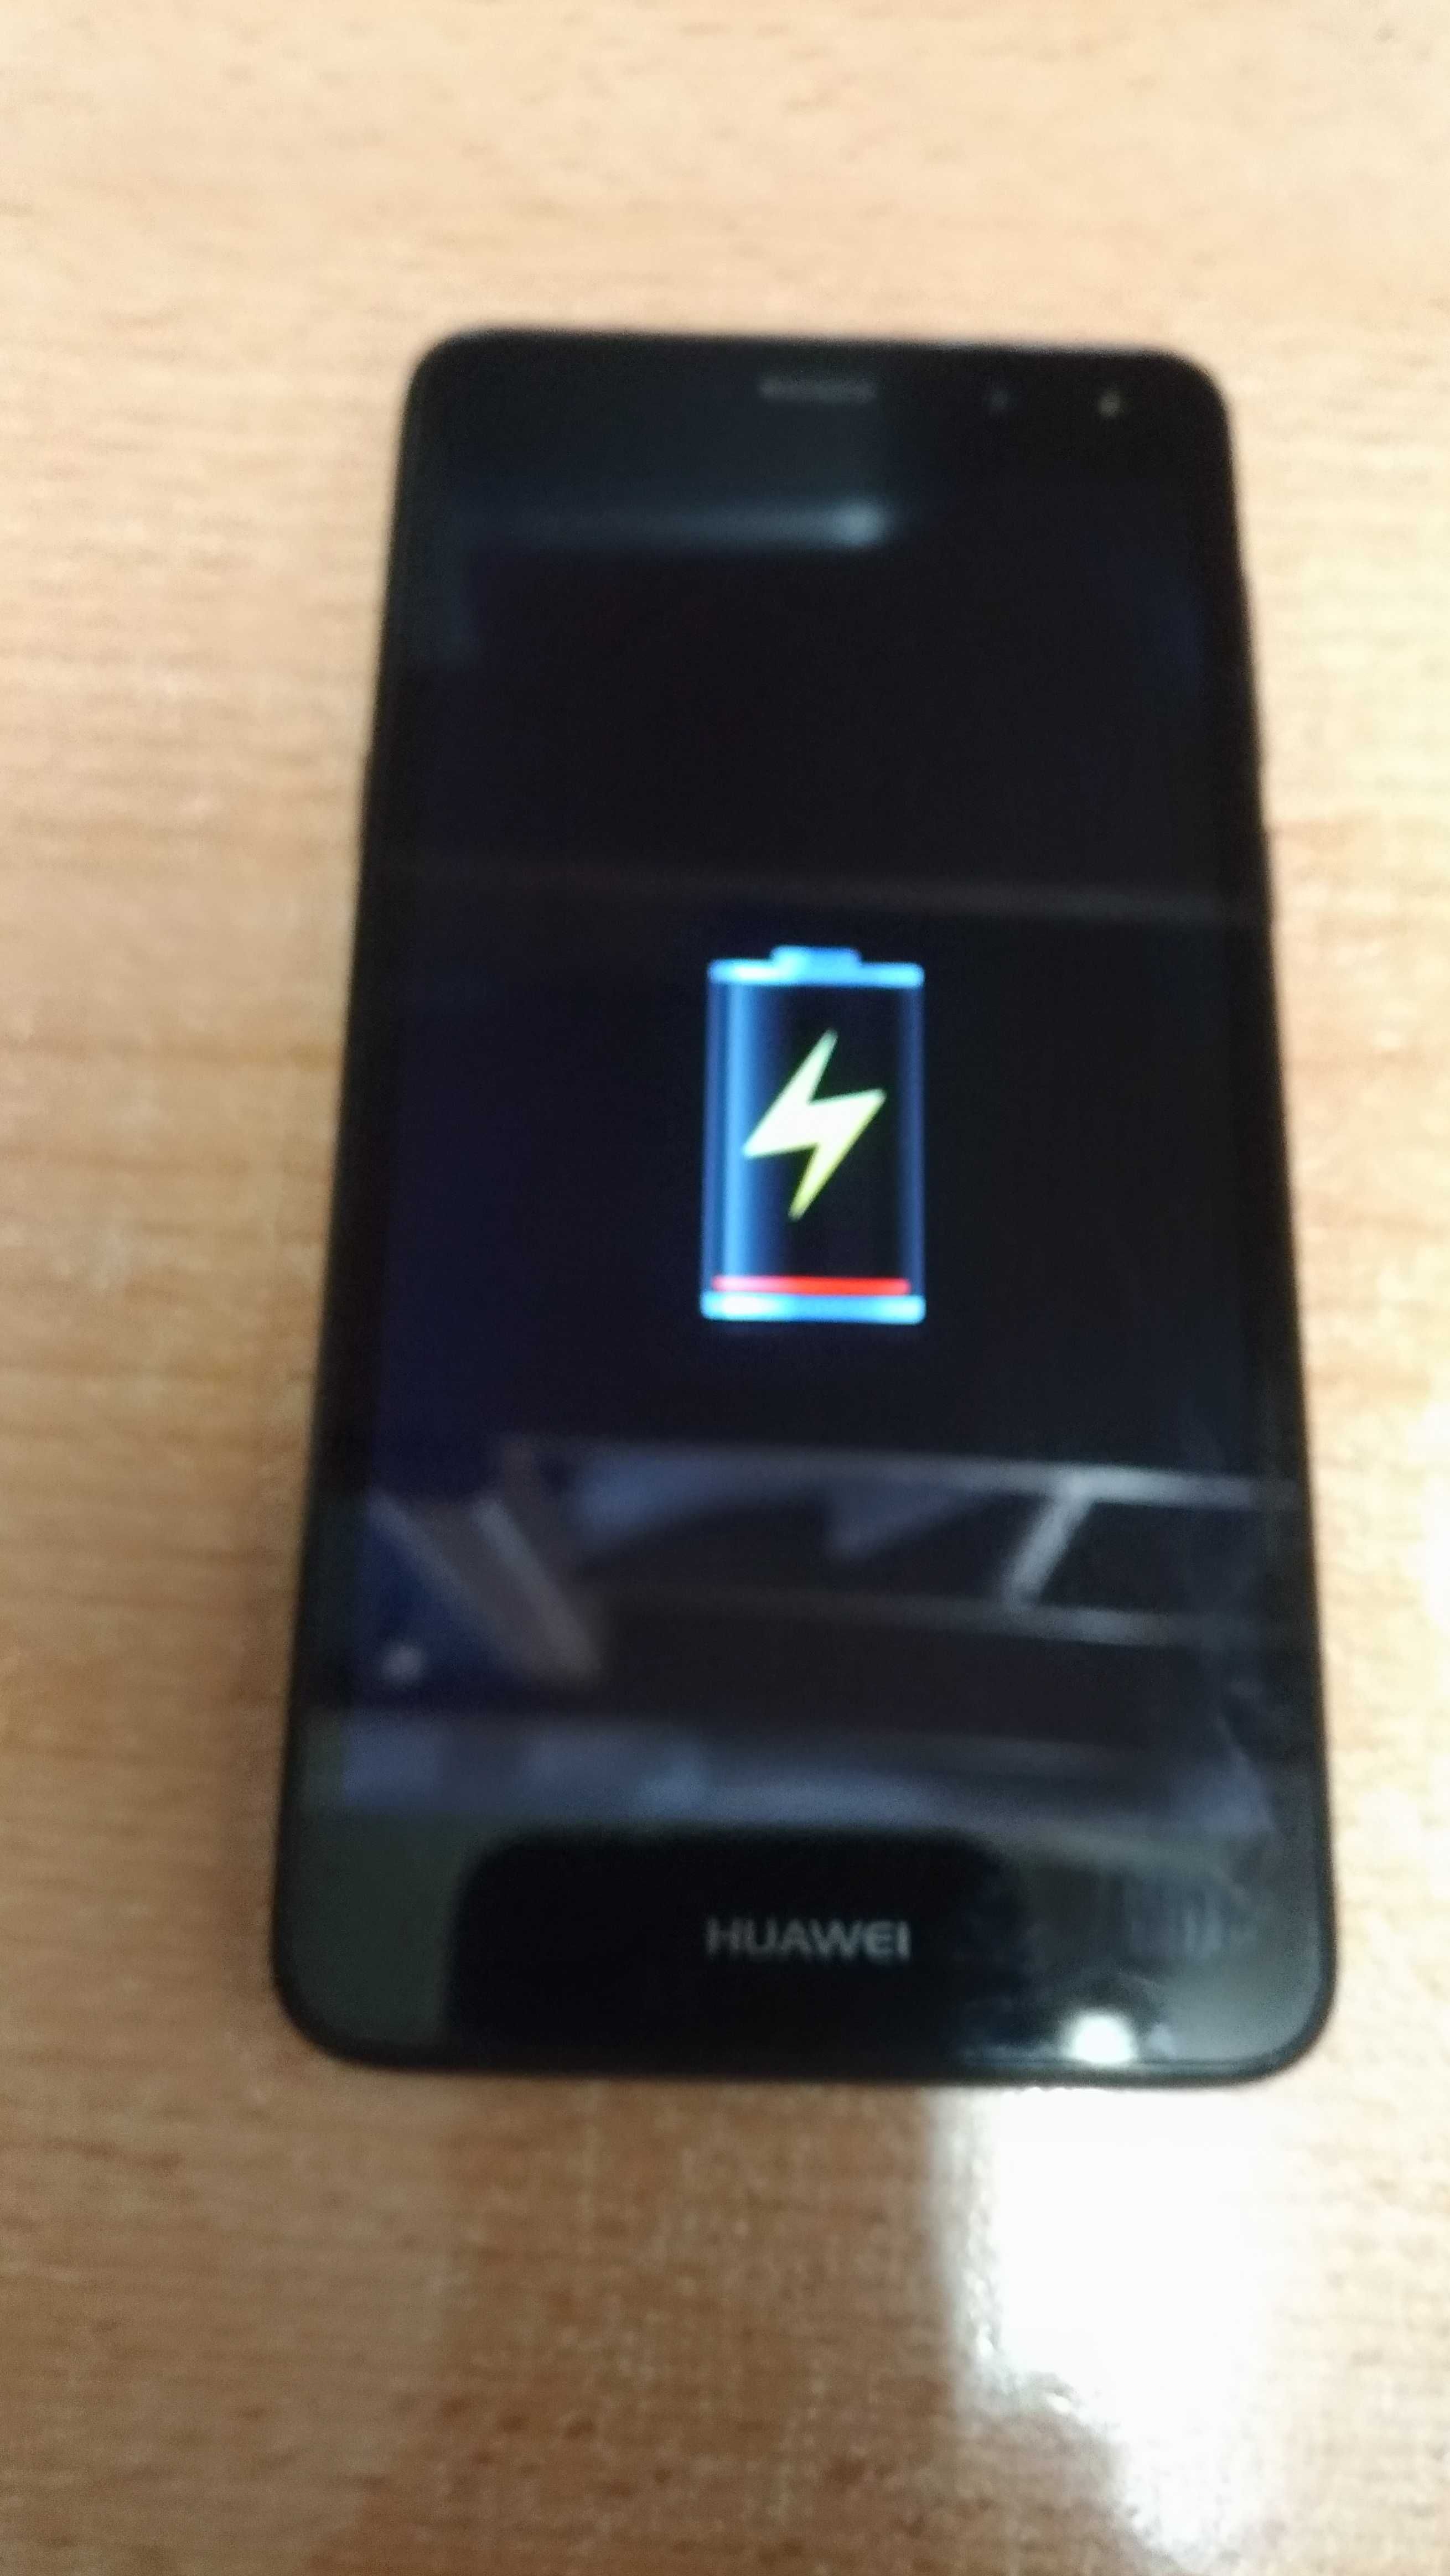 Huawei Y6 dual sim